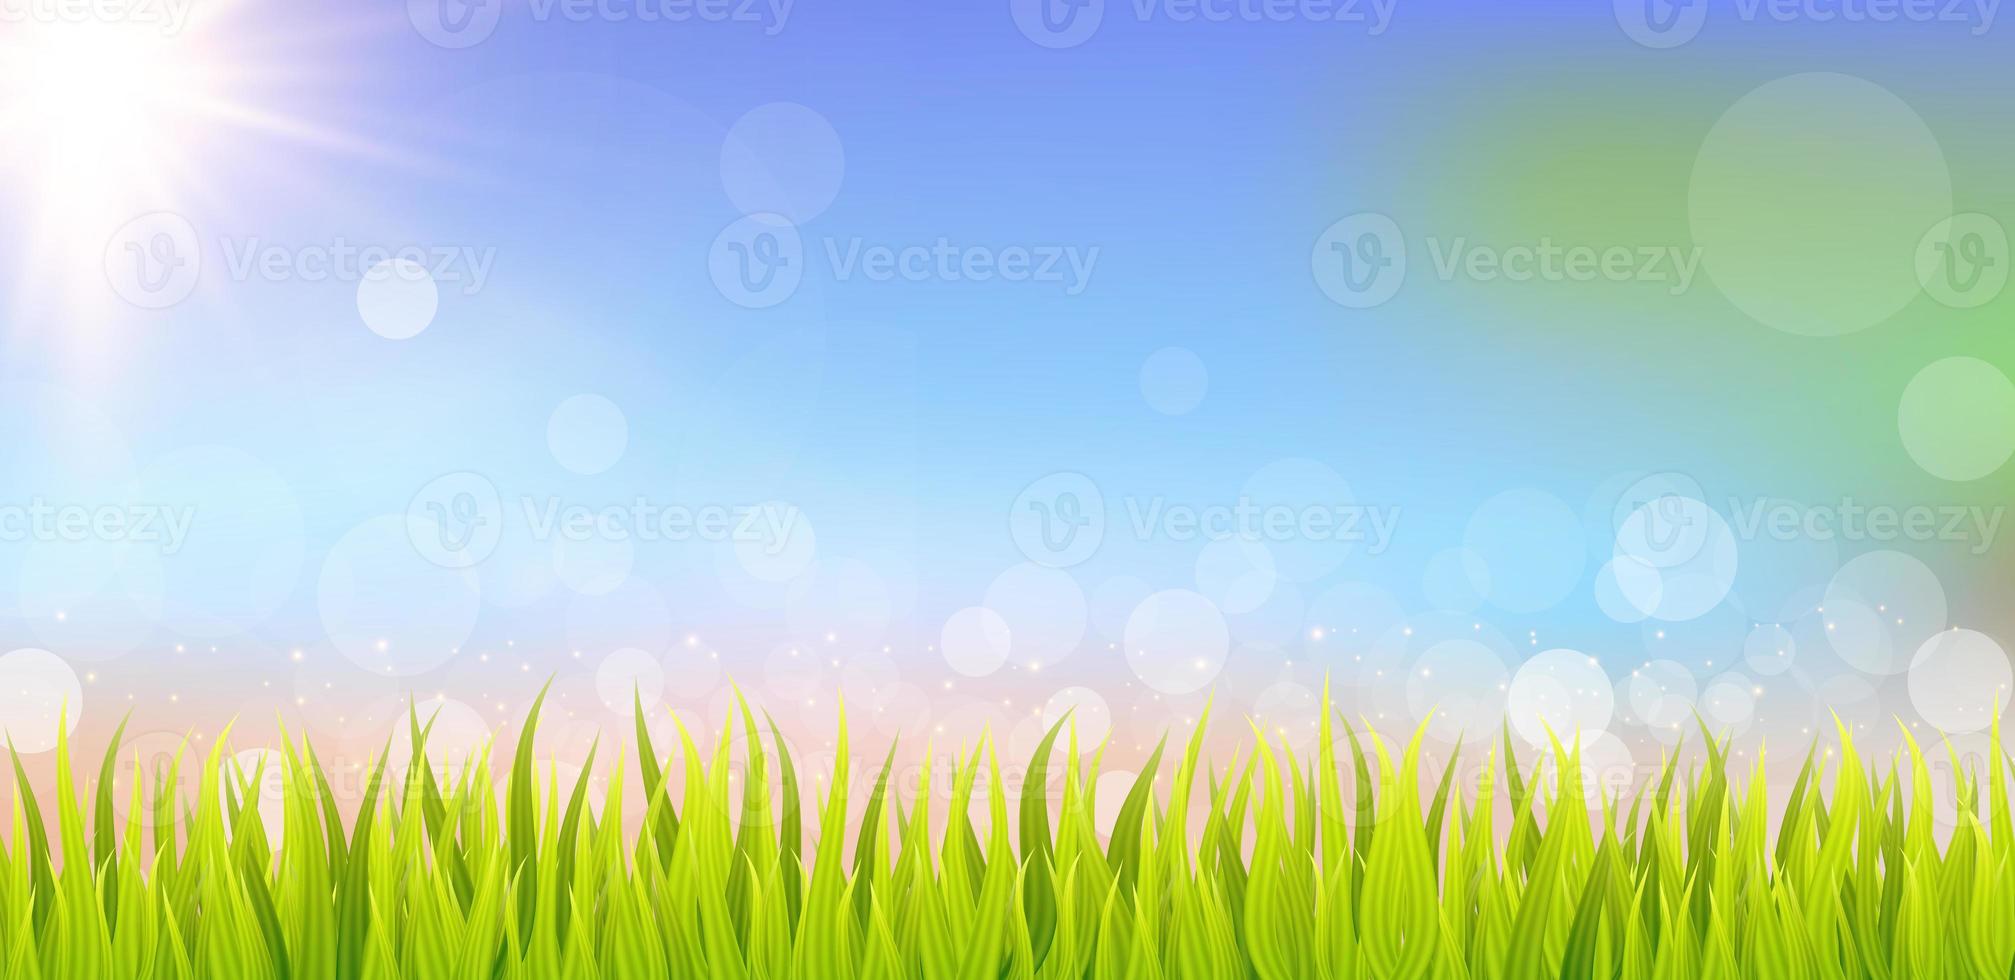 Abstract grass illustration on bokeh background. Illustrate sky scene. photo